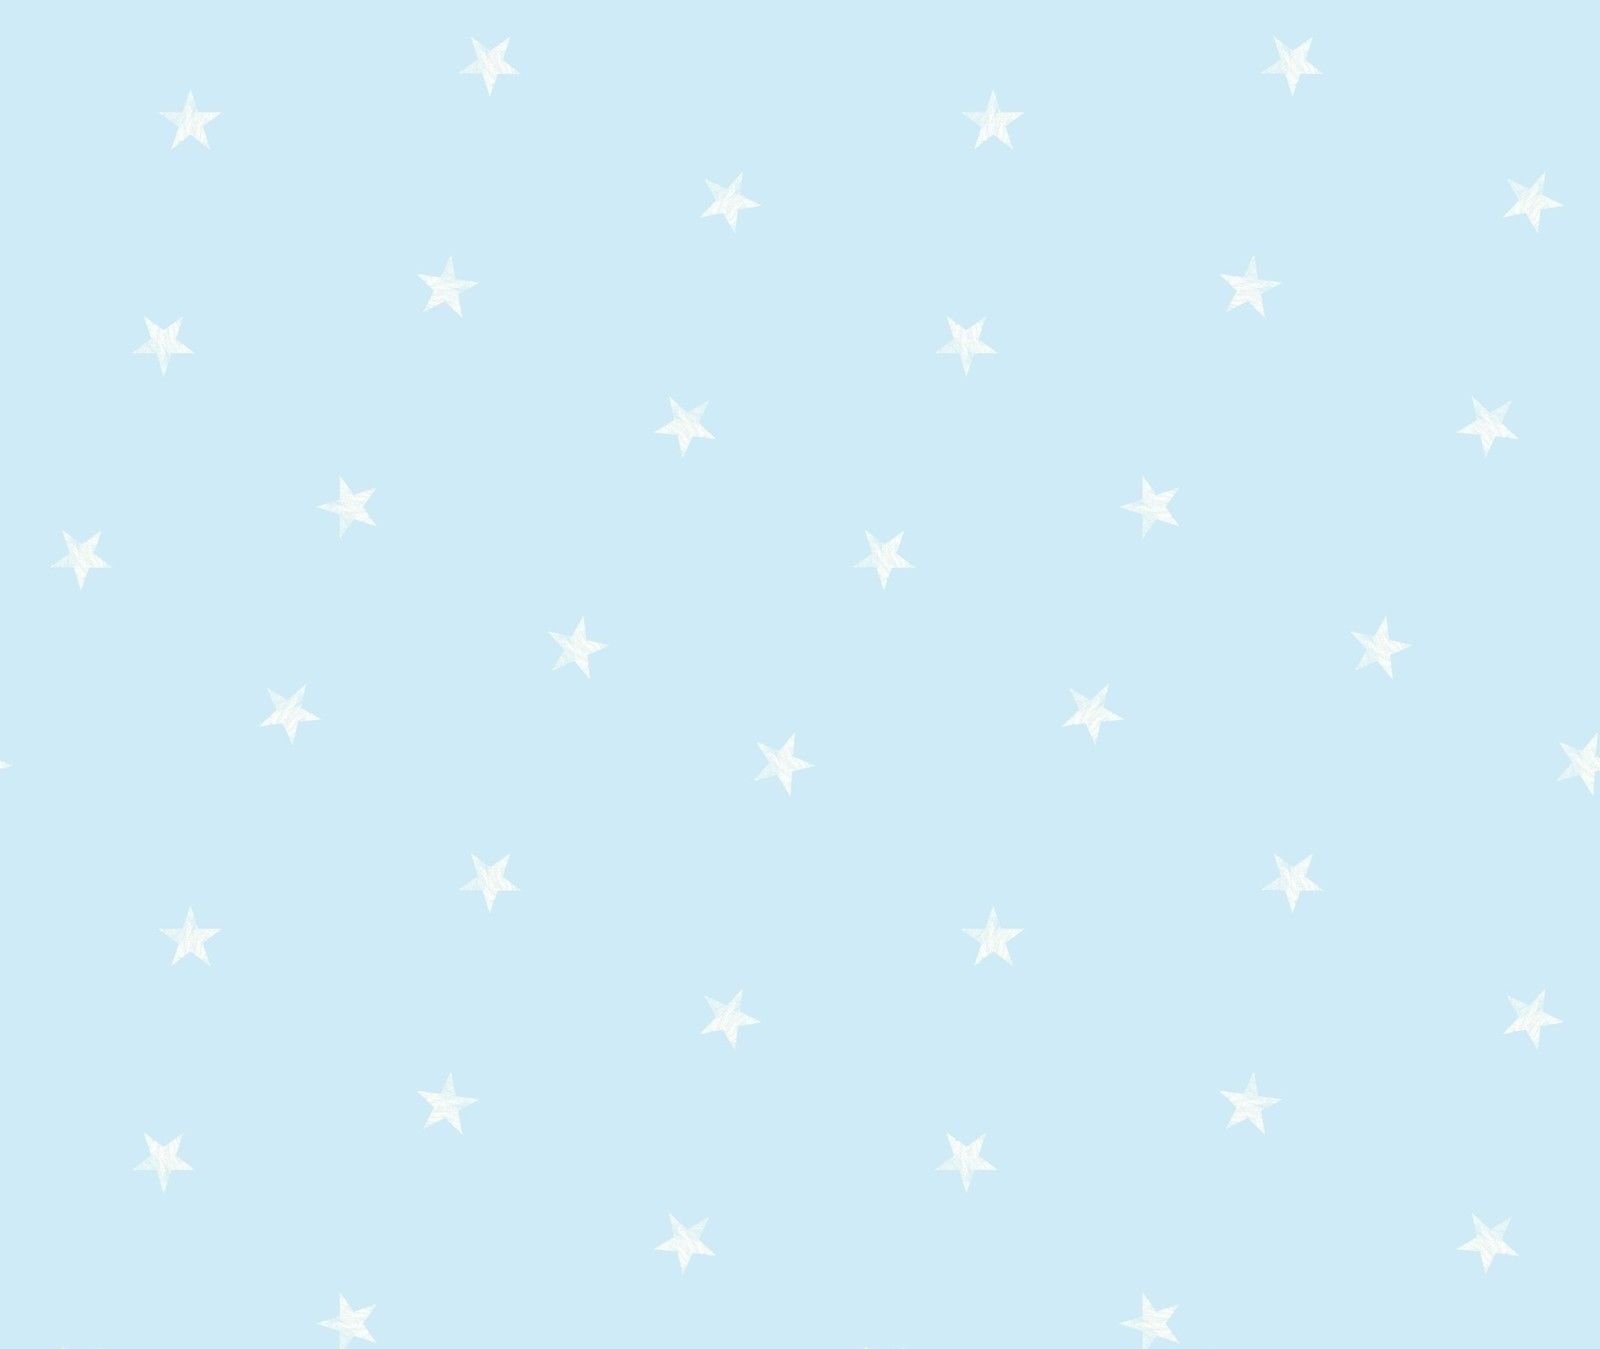 Vector line art leaves seamless pattern, baby blue, wallpaper